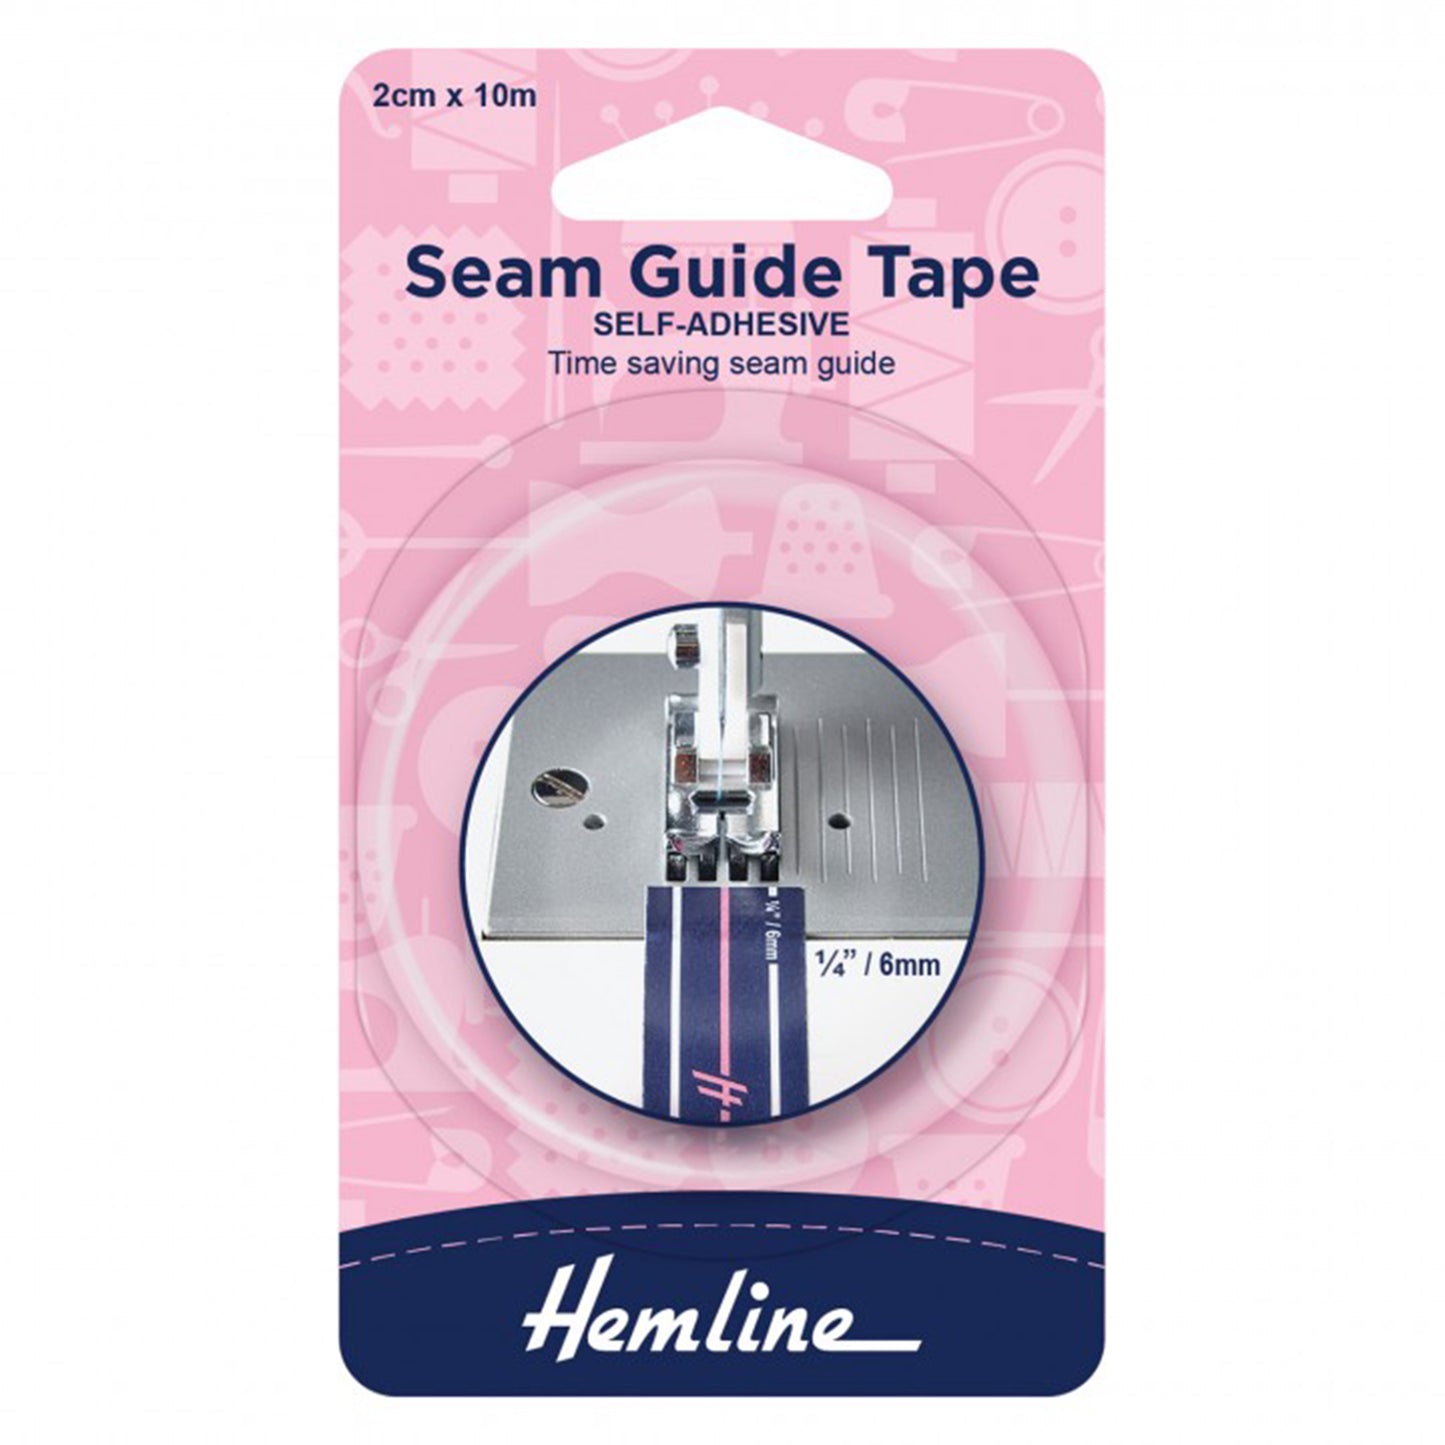 Seam Guide Tape: 10m x 2cm